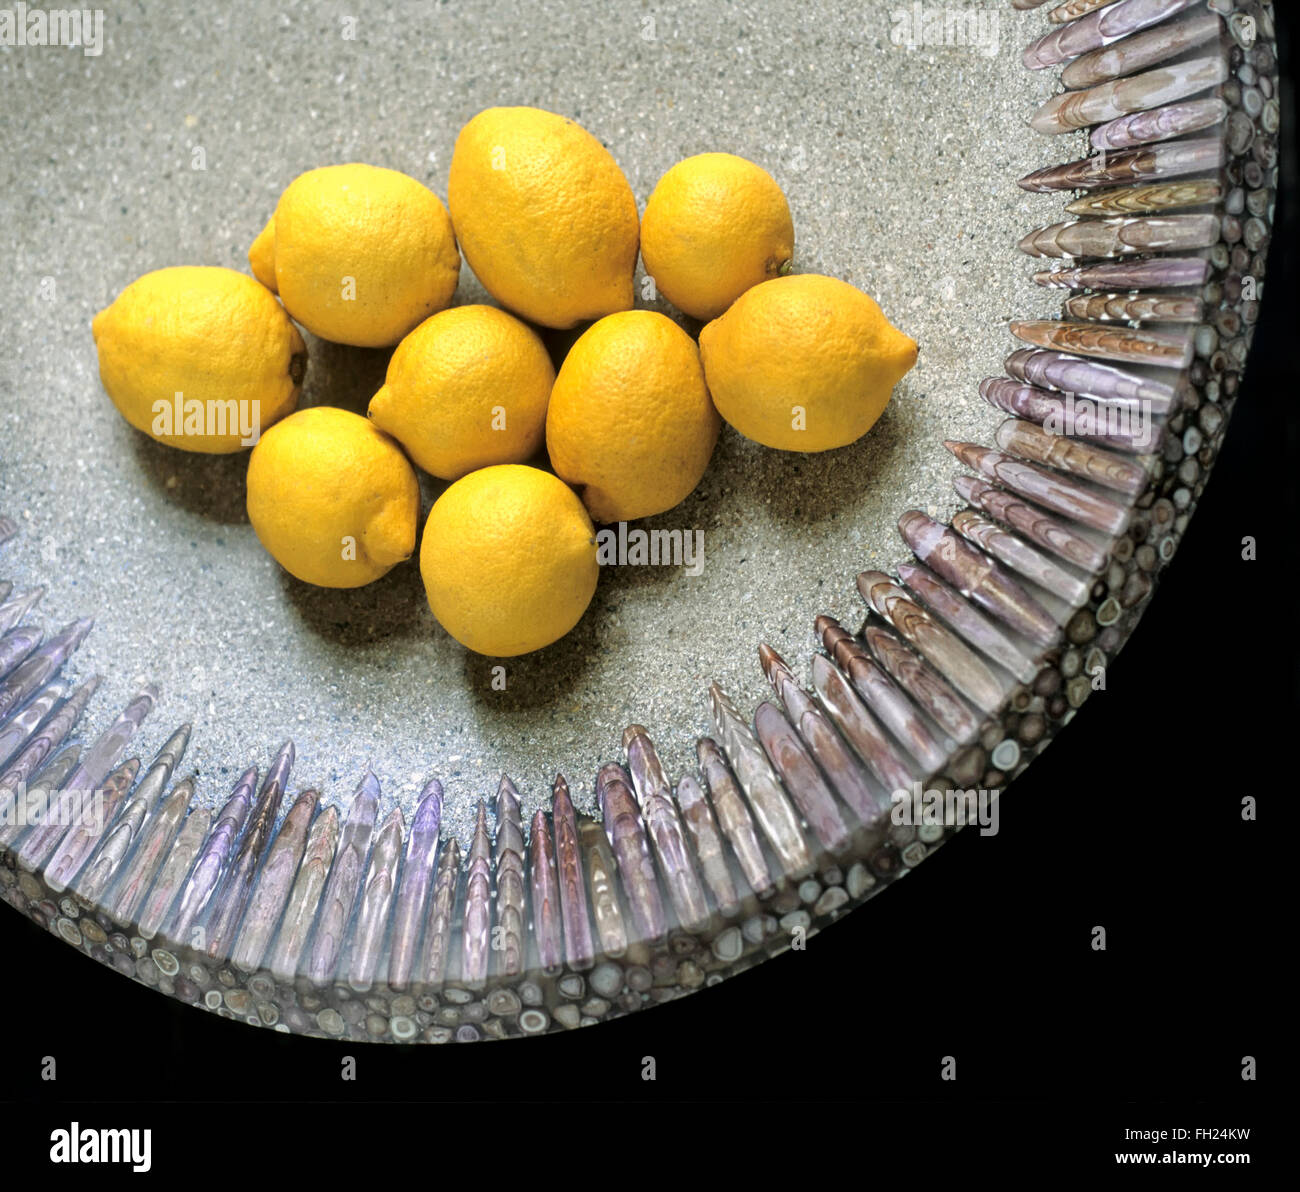 designer bowl with lemons. Stock Photo